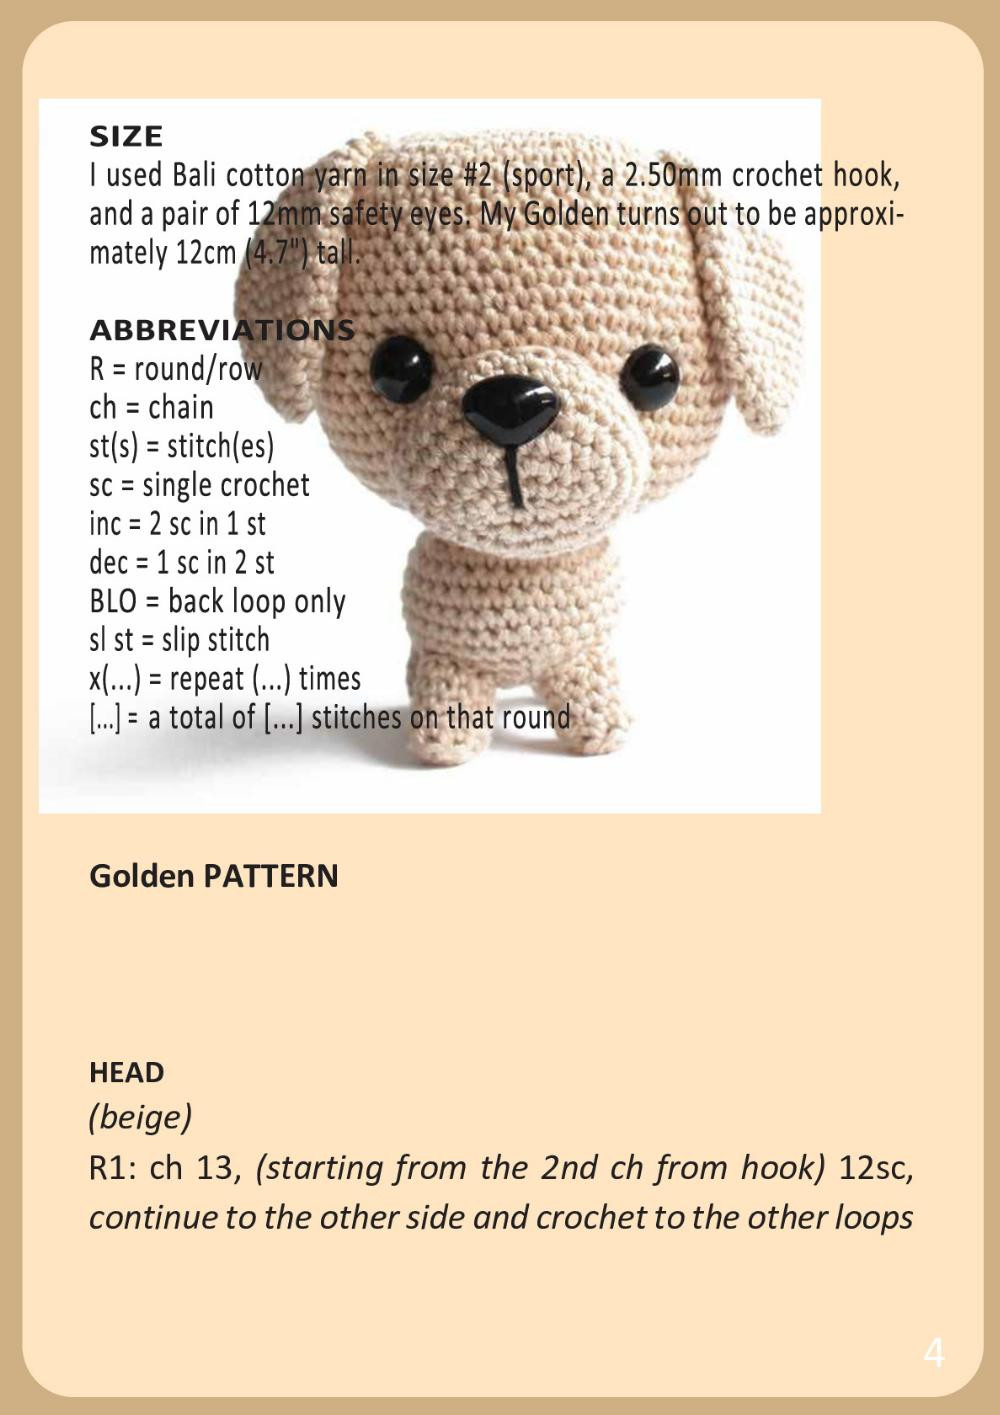 Golden dog crochet pattern